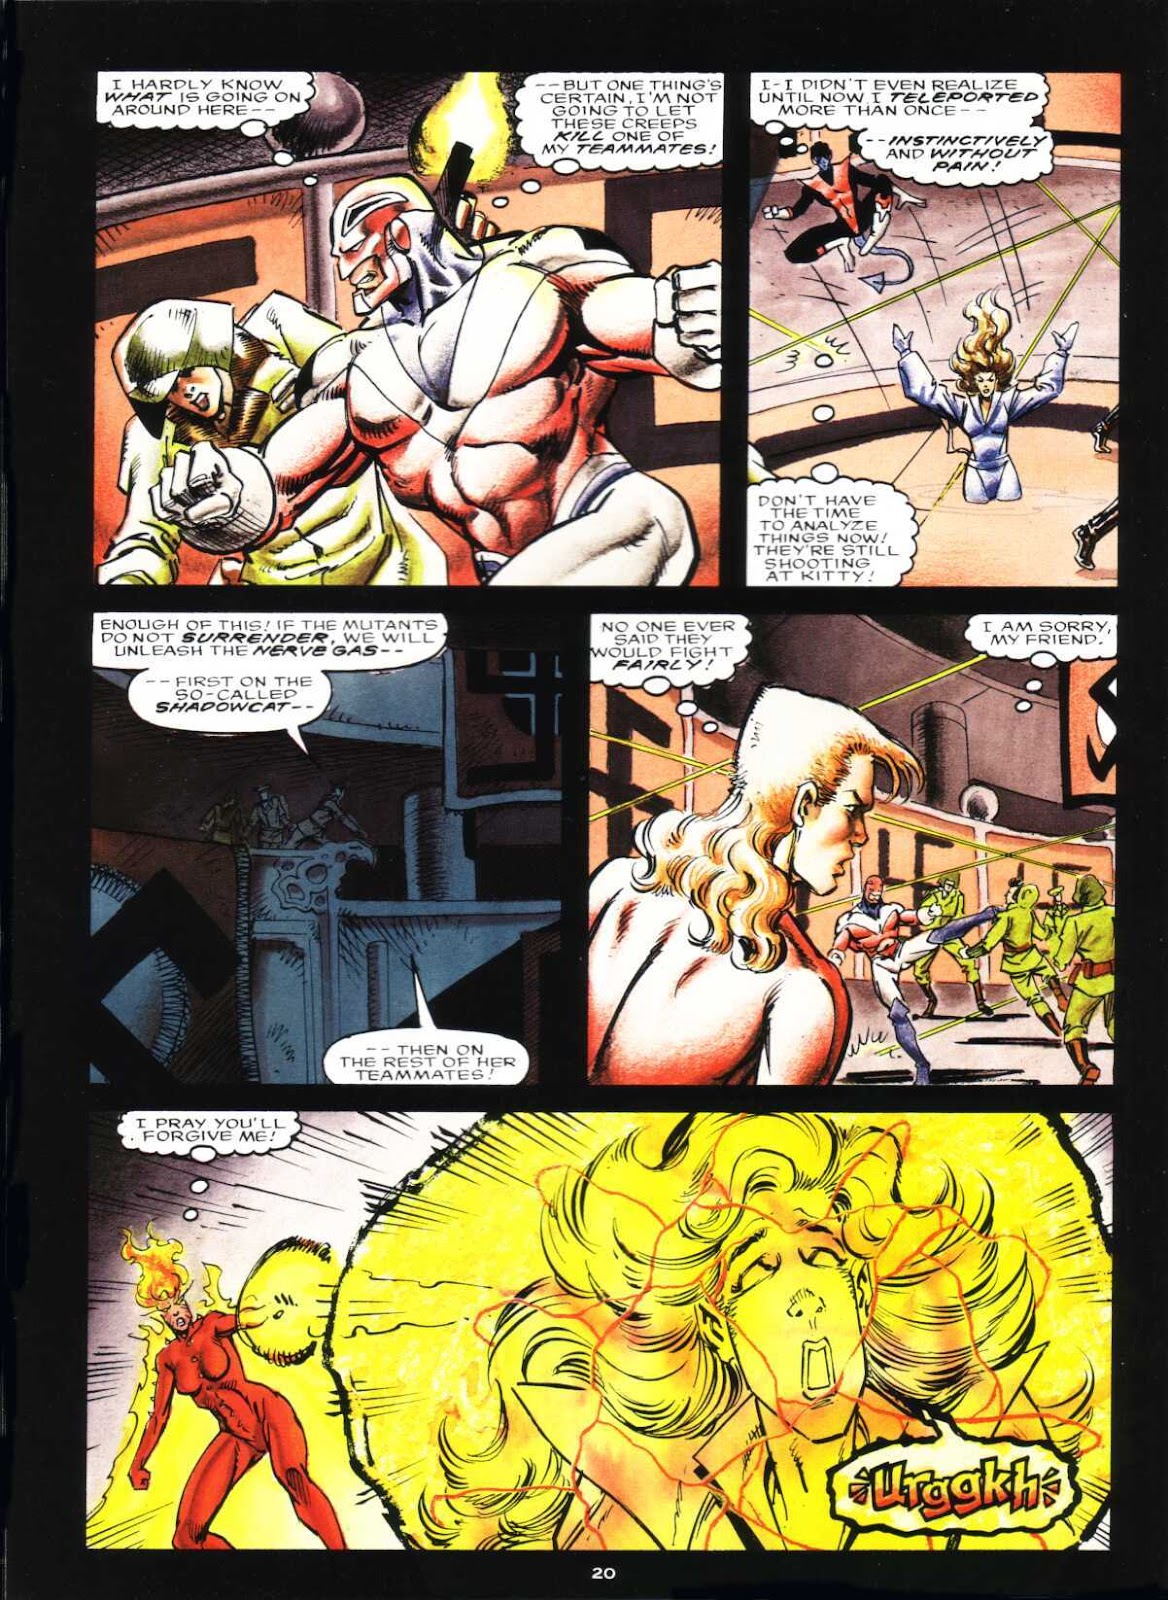 Marvel Graphic Novel issue 66 - Excalibur - Weird War III - Page 20